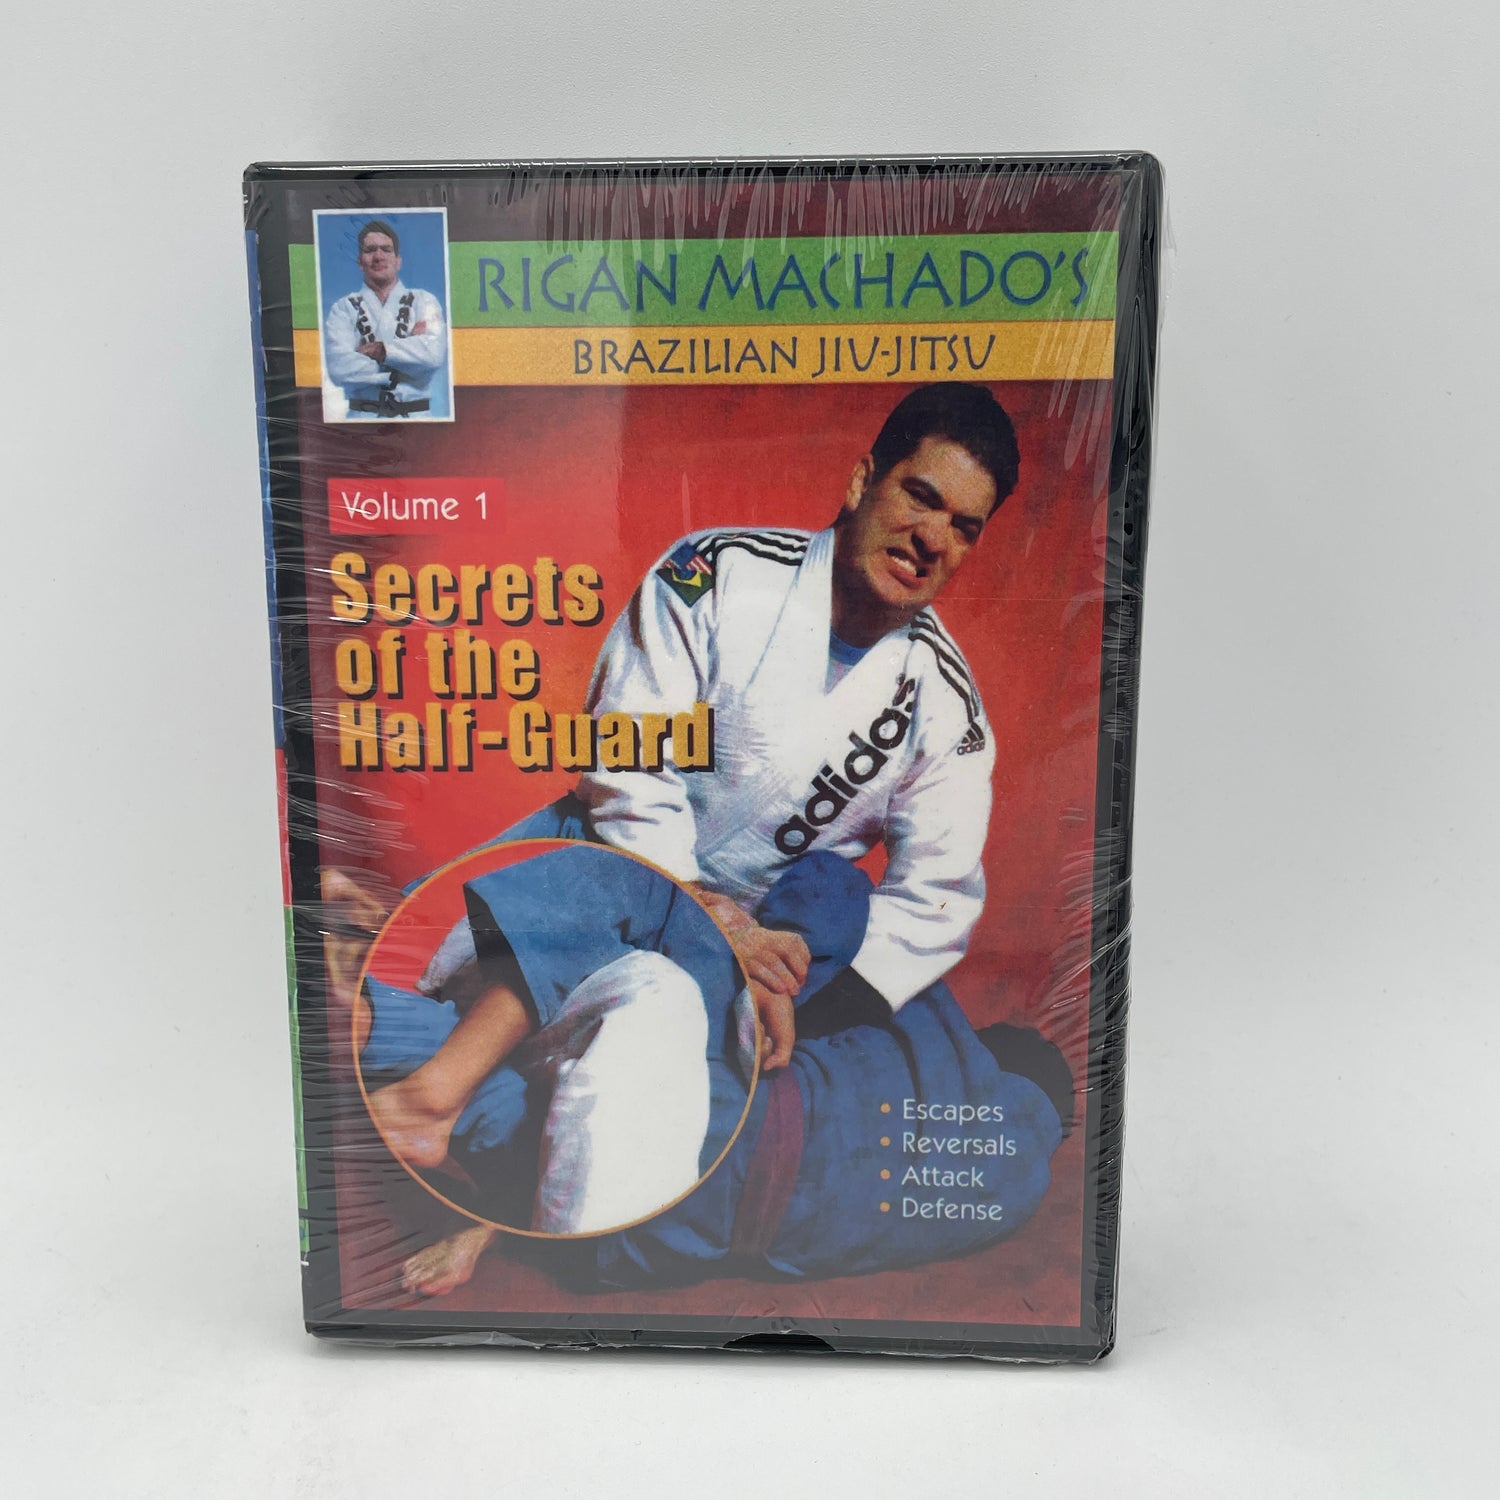 Secrets of the Half Guard 3 DVD Set by Rigan Machado